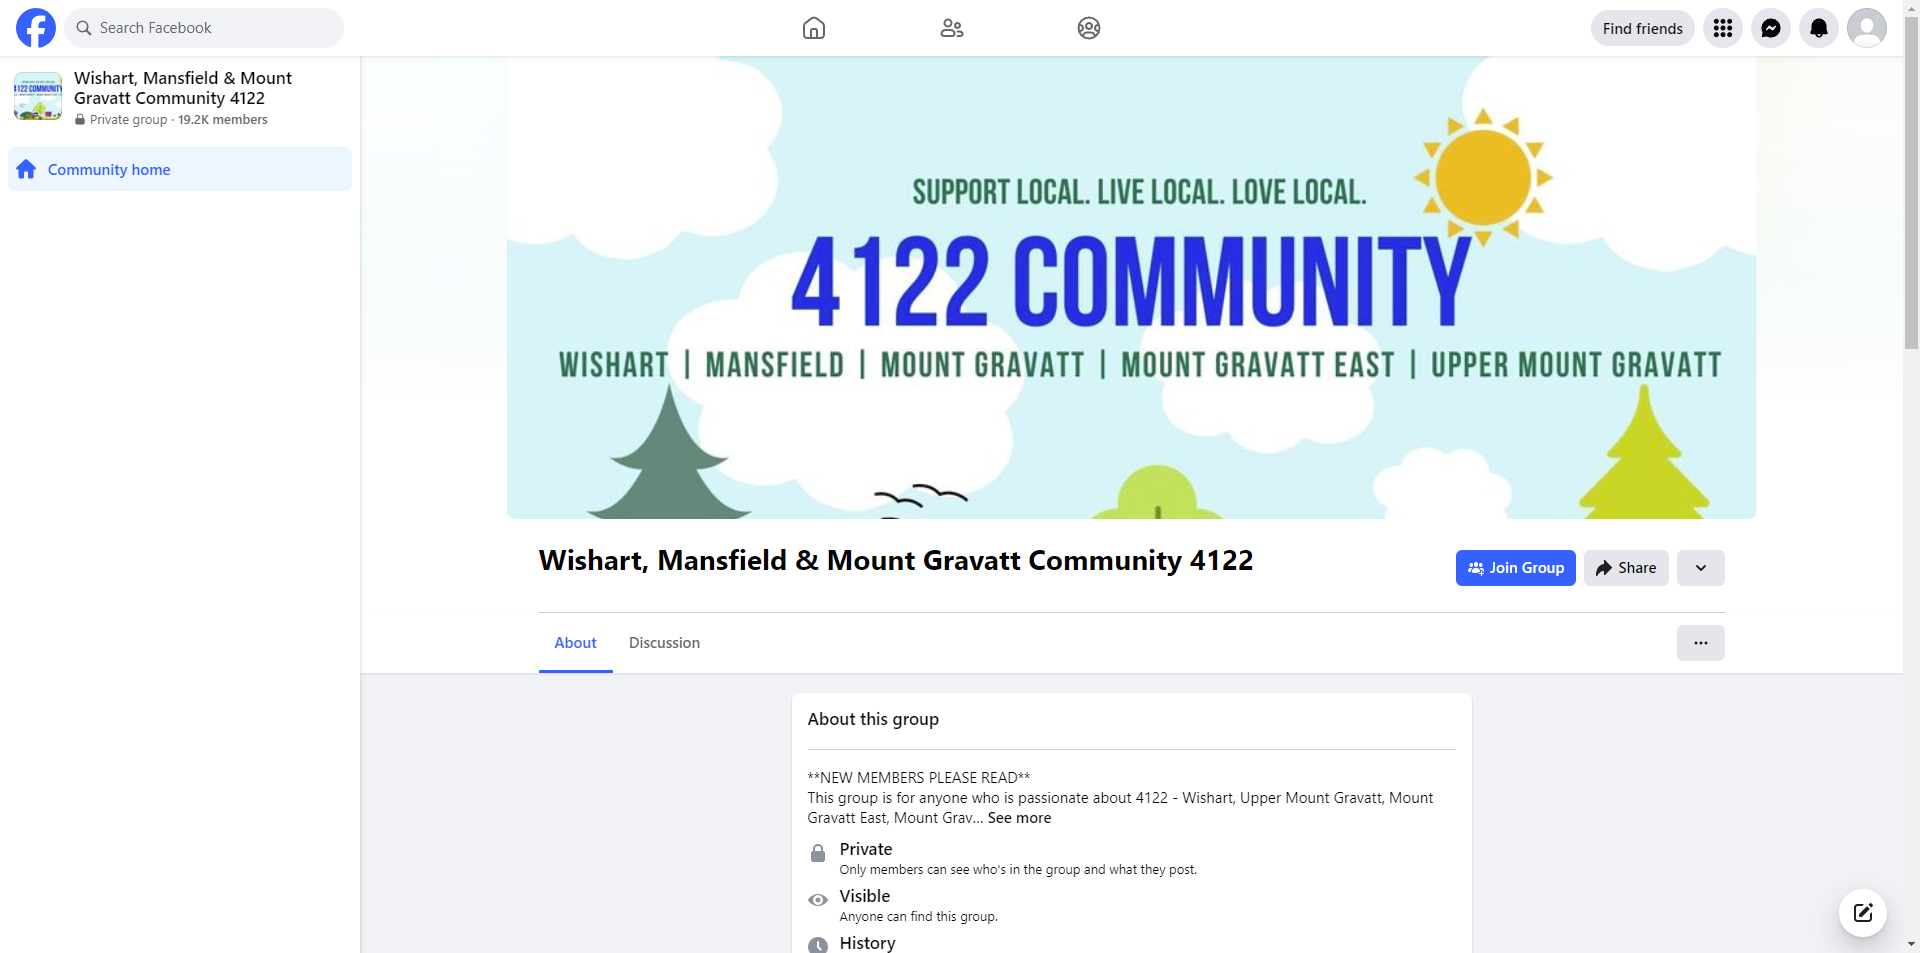 Wishart, Mansfield & Mount Gravatt Community 4122